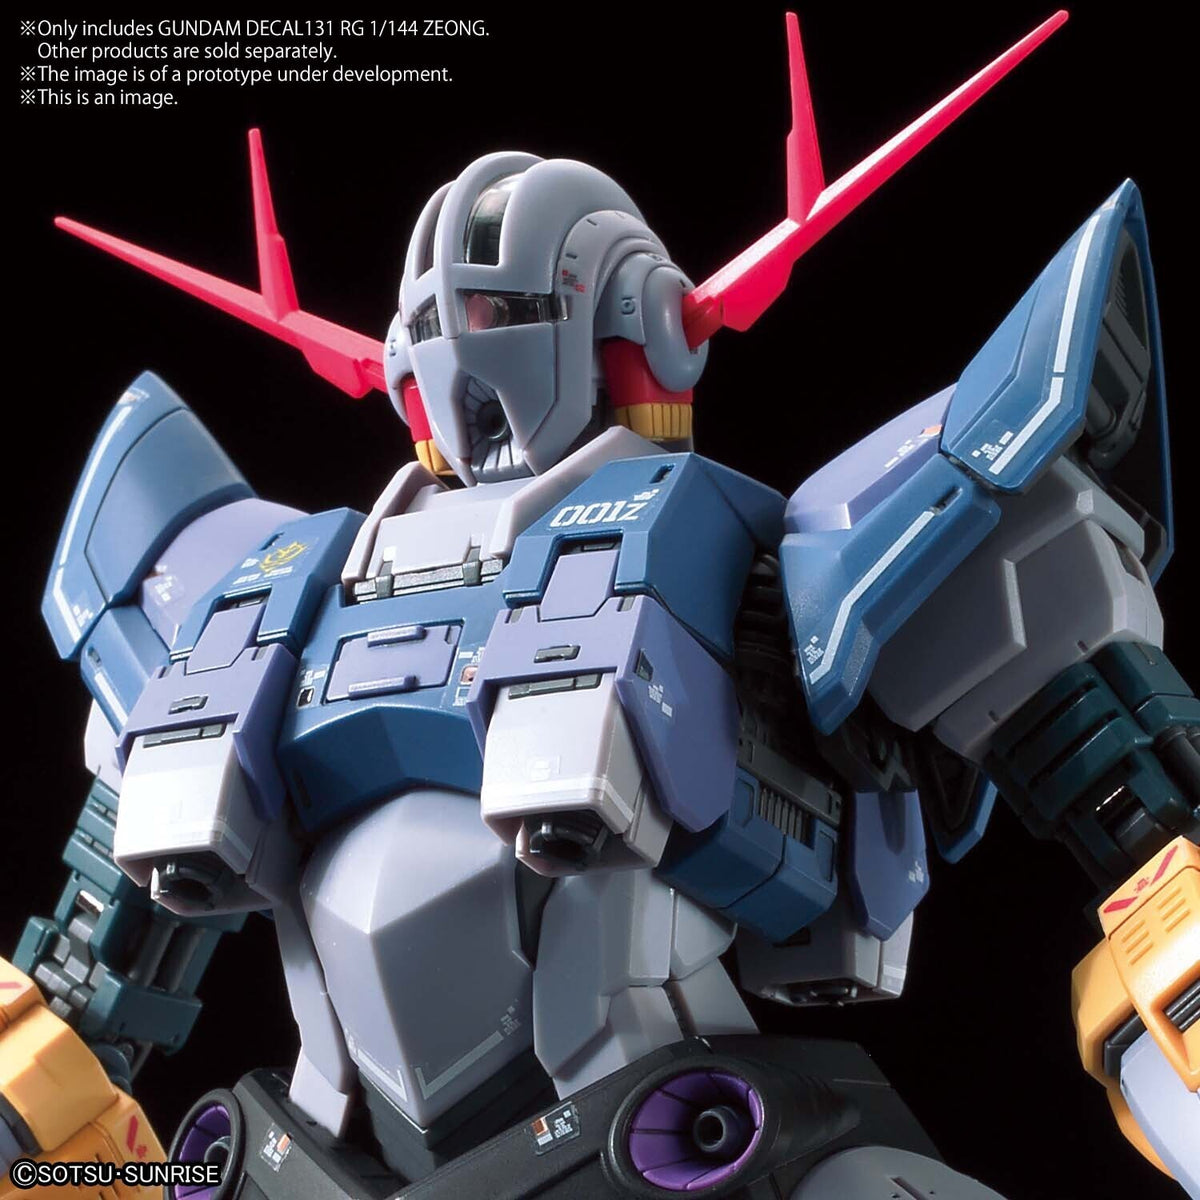 Gundam Decal131 Rg 1/144 Zeong